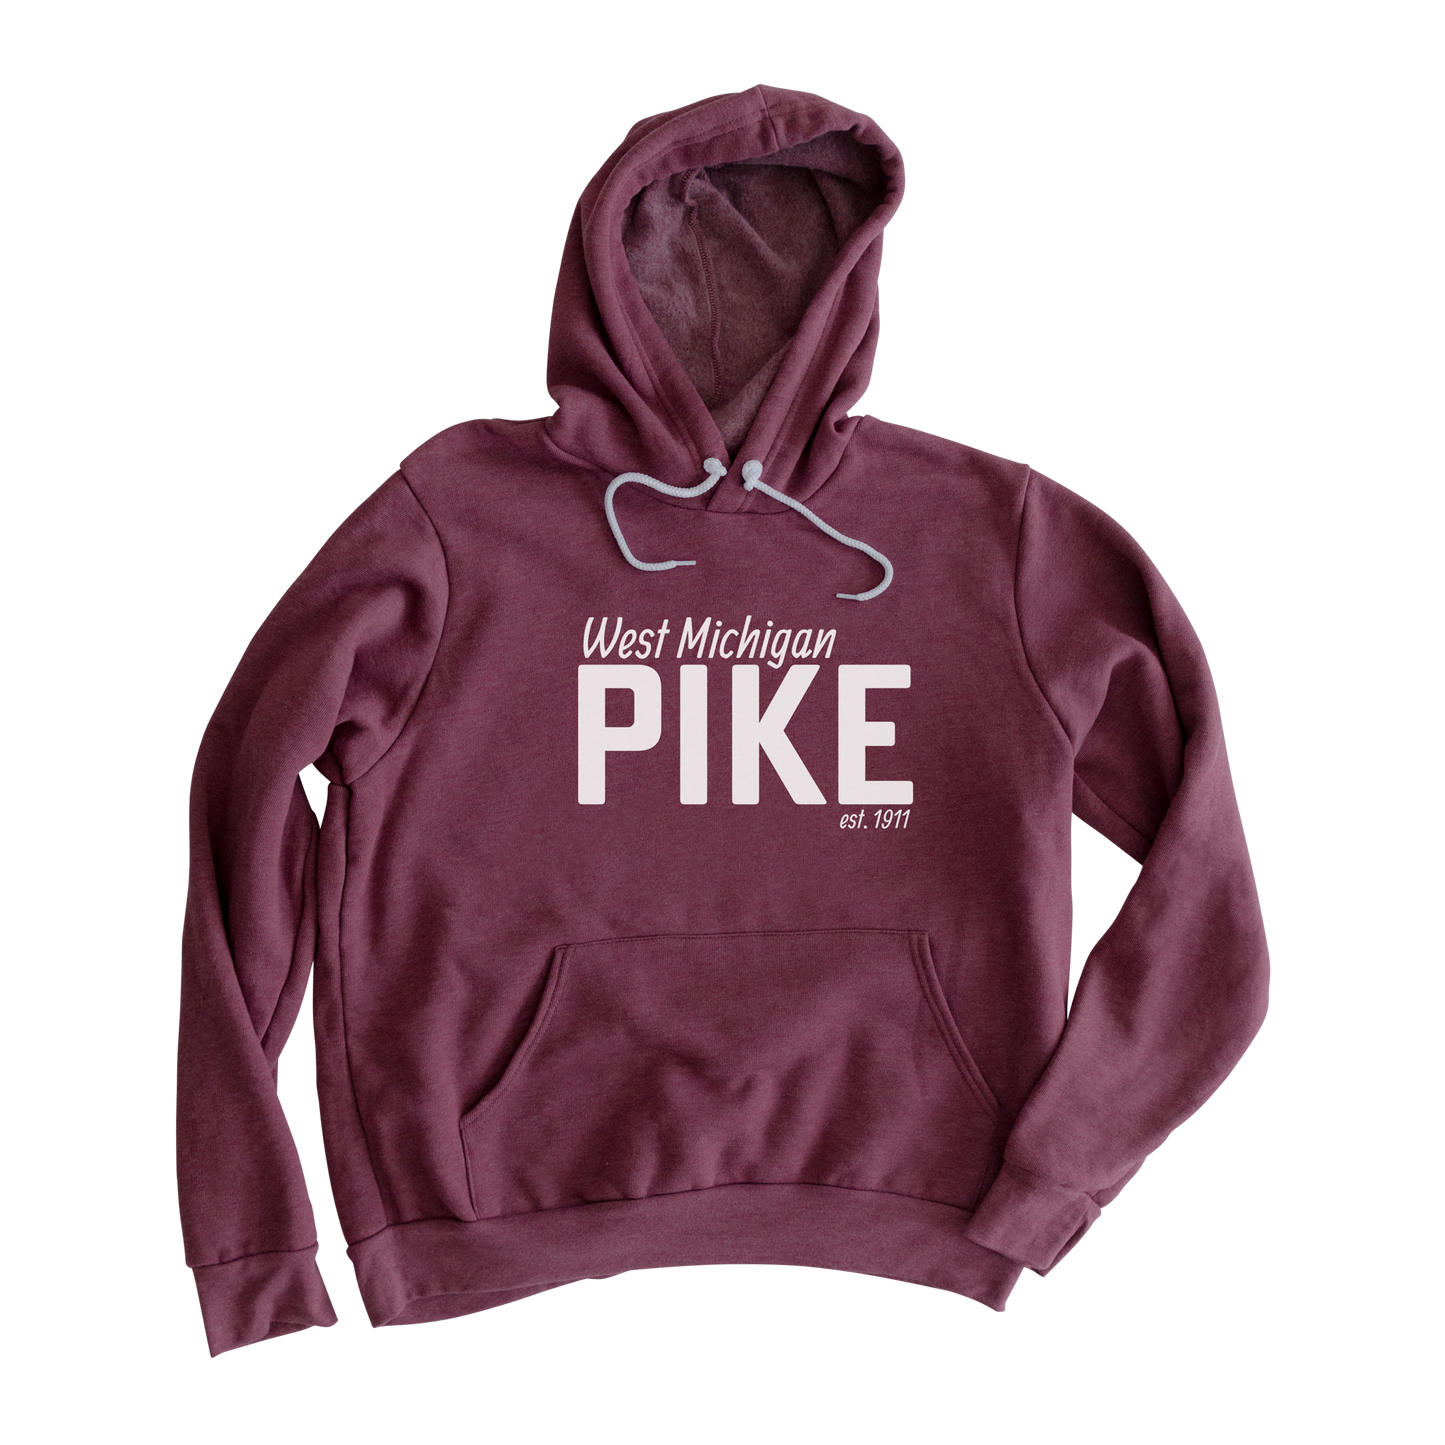 West Michigan Pike Est. 1911 Hooded Sweatshirt